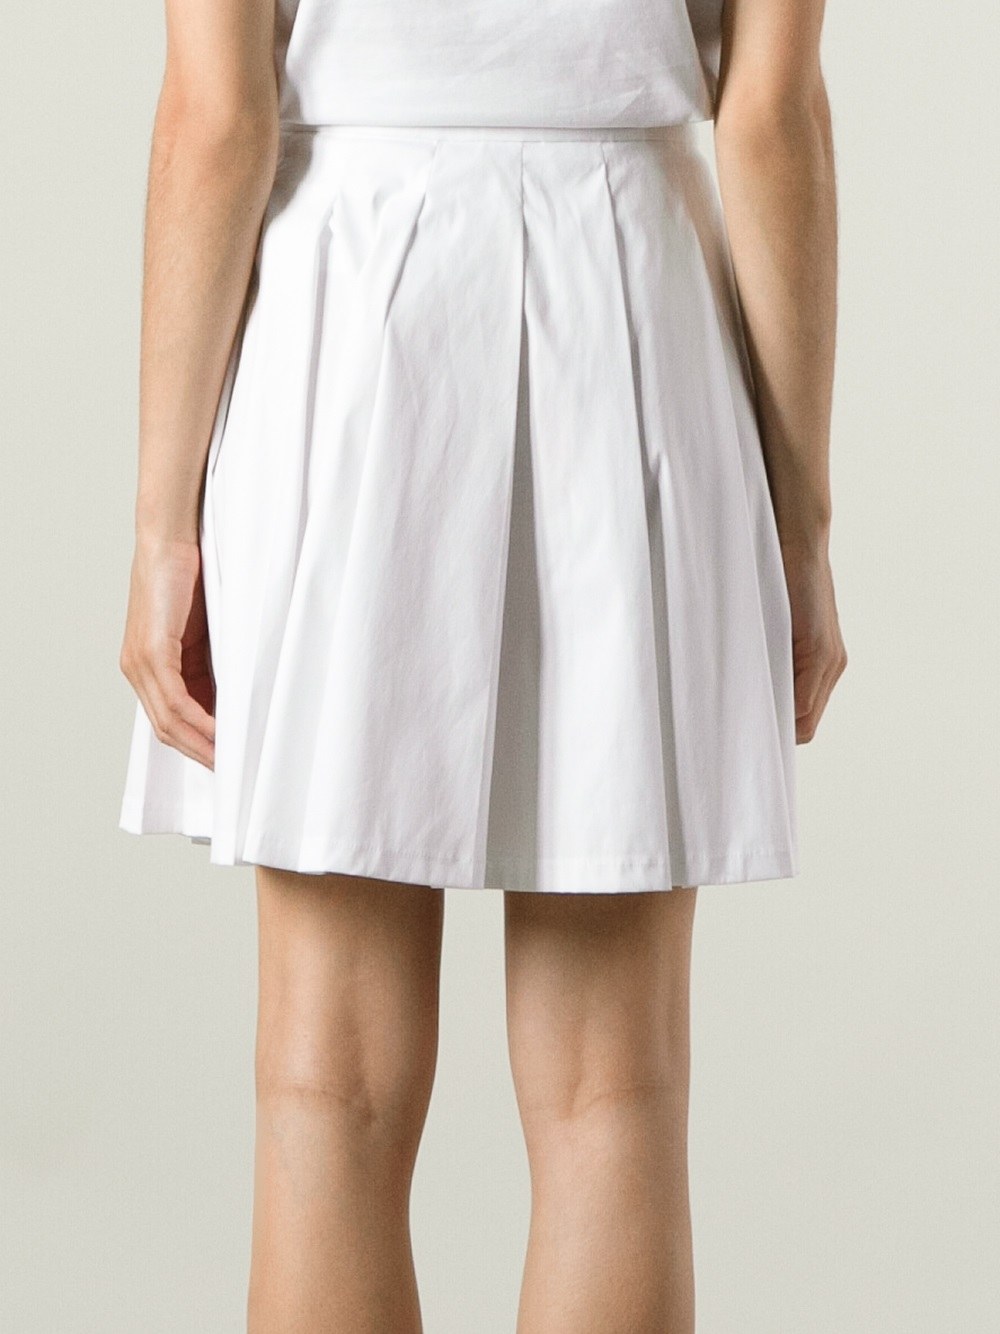 Lyst - Love Moschino Heart Print Pleated Skirt in White